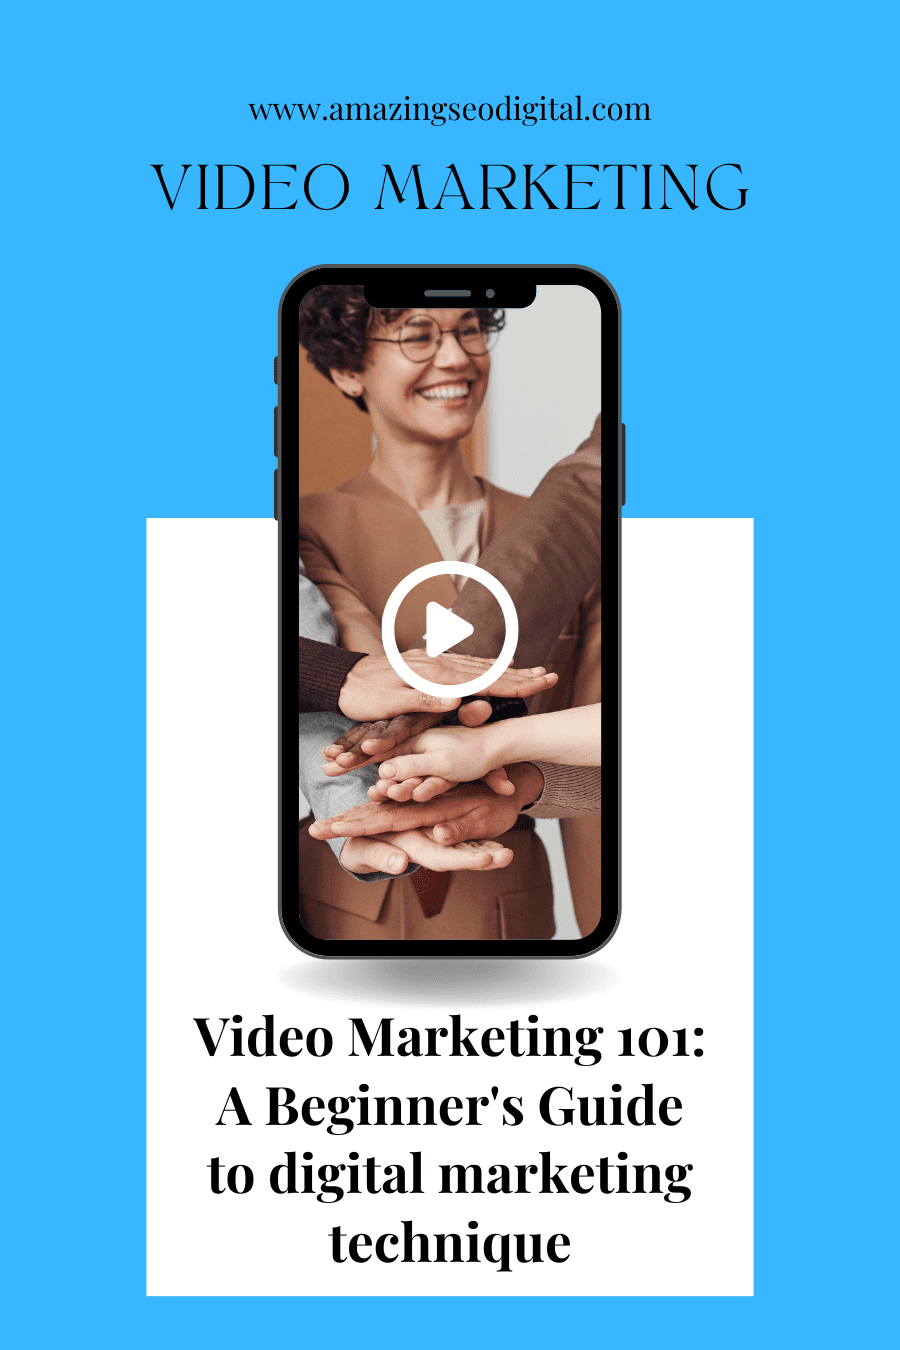 Video Marketing 101: A Beginner's Guide to digital marketing technique